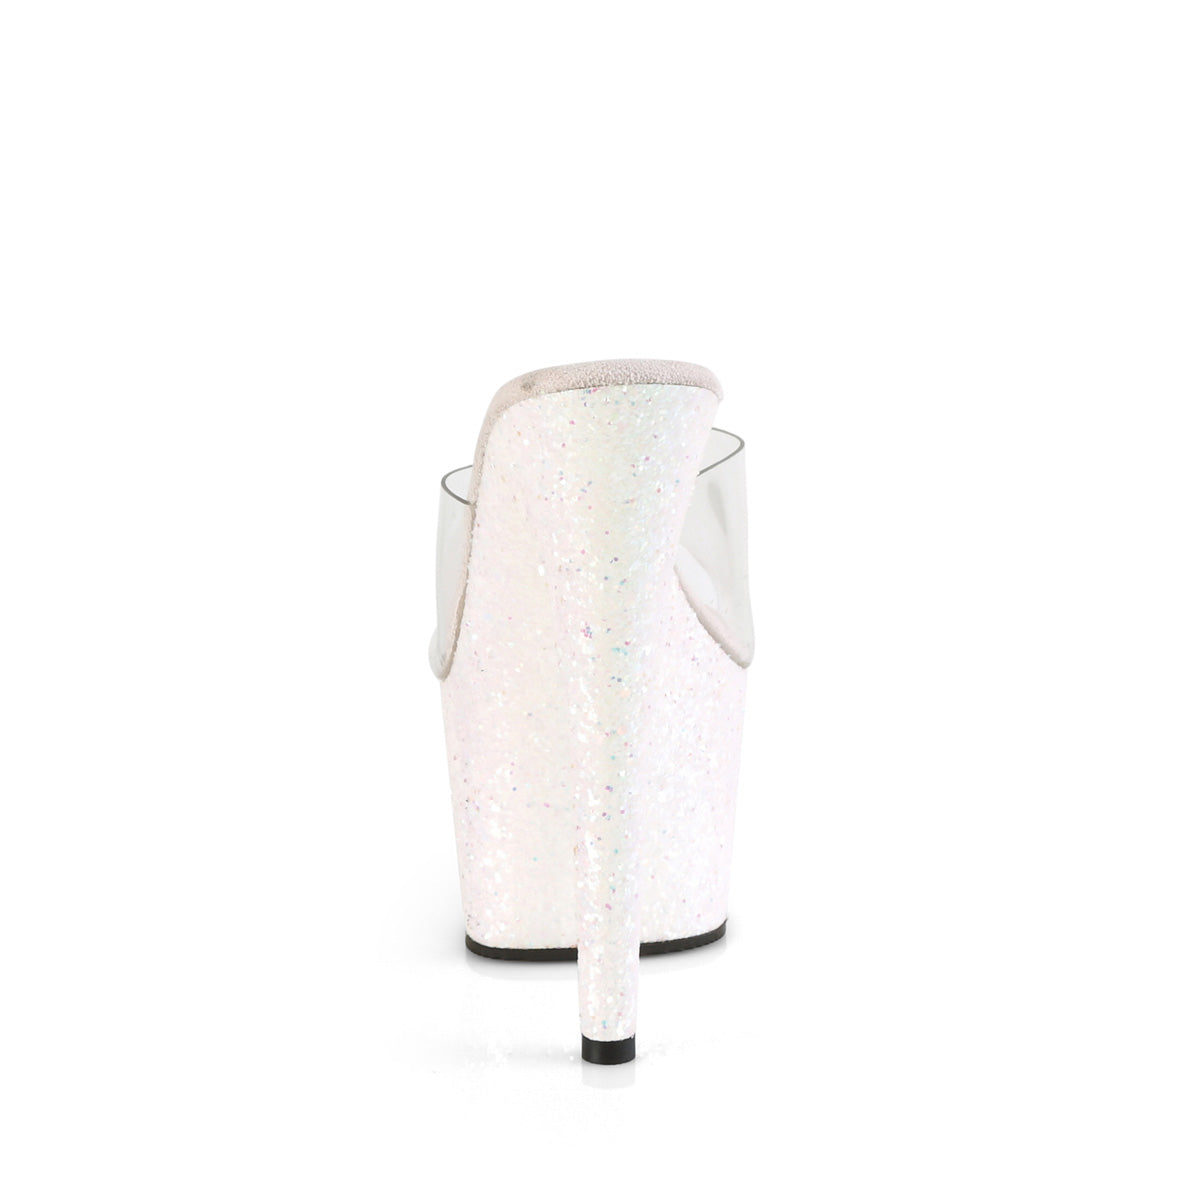 Pleaser Womens Sandals ADORE-701LG Clr/Opal Multi Glitter